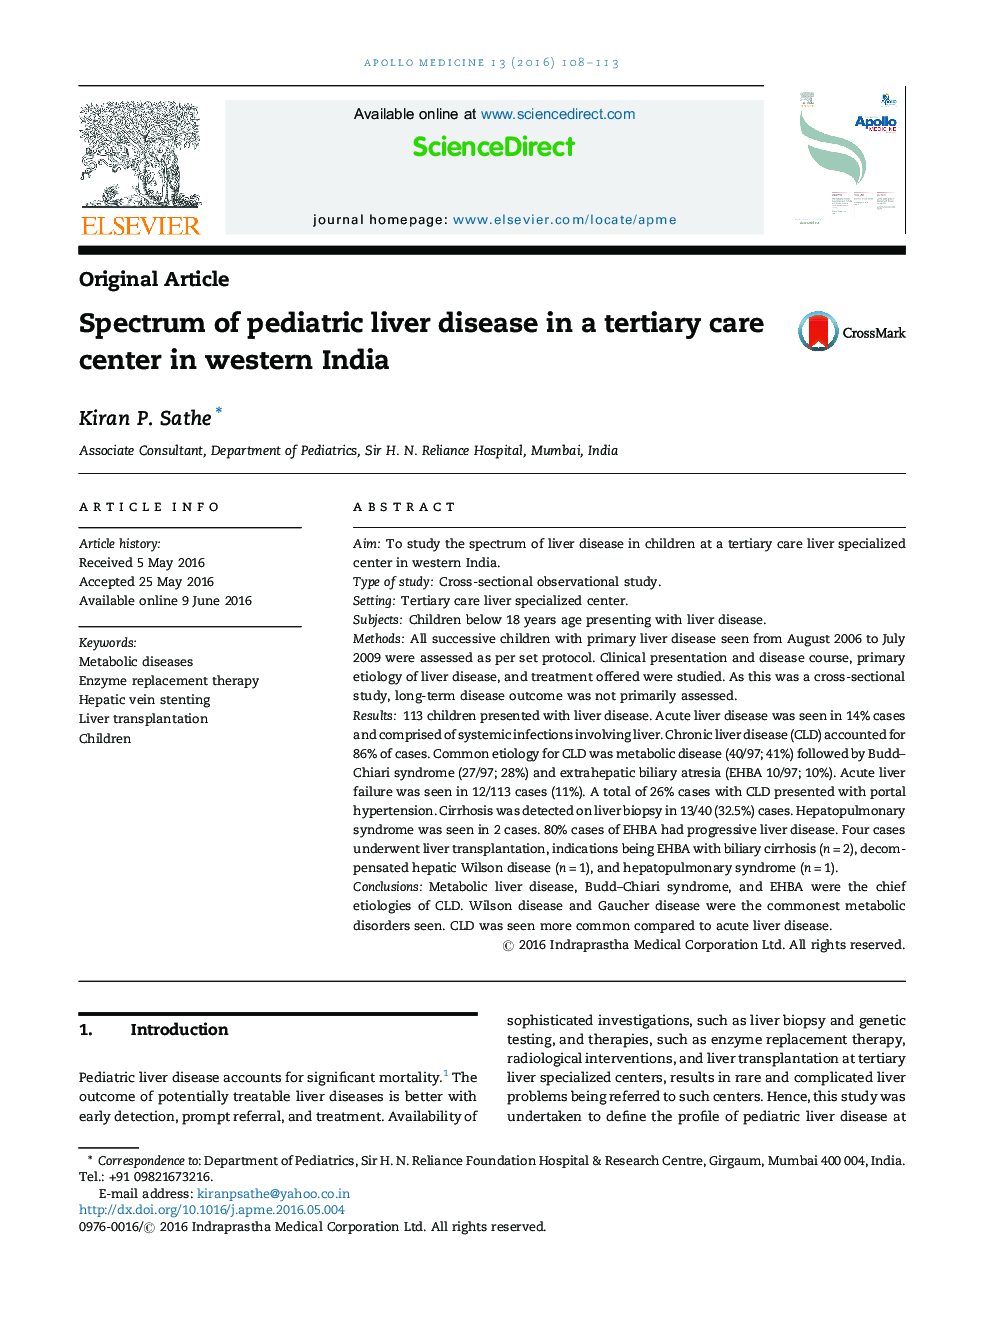 Spectrum of pediatric liver disease in a tertiary care center in western India